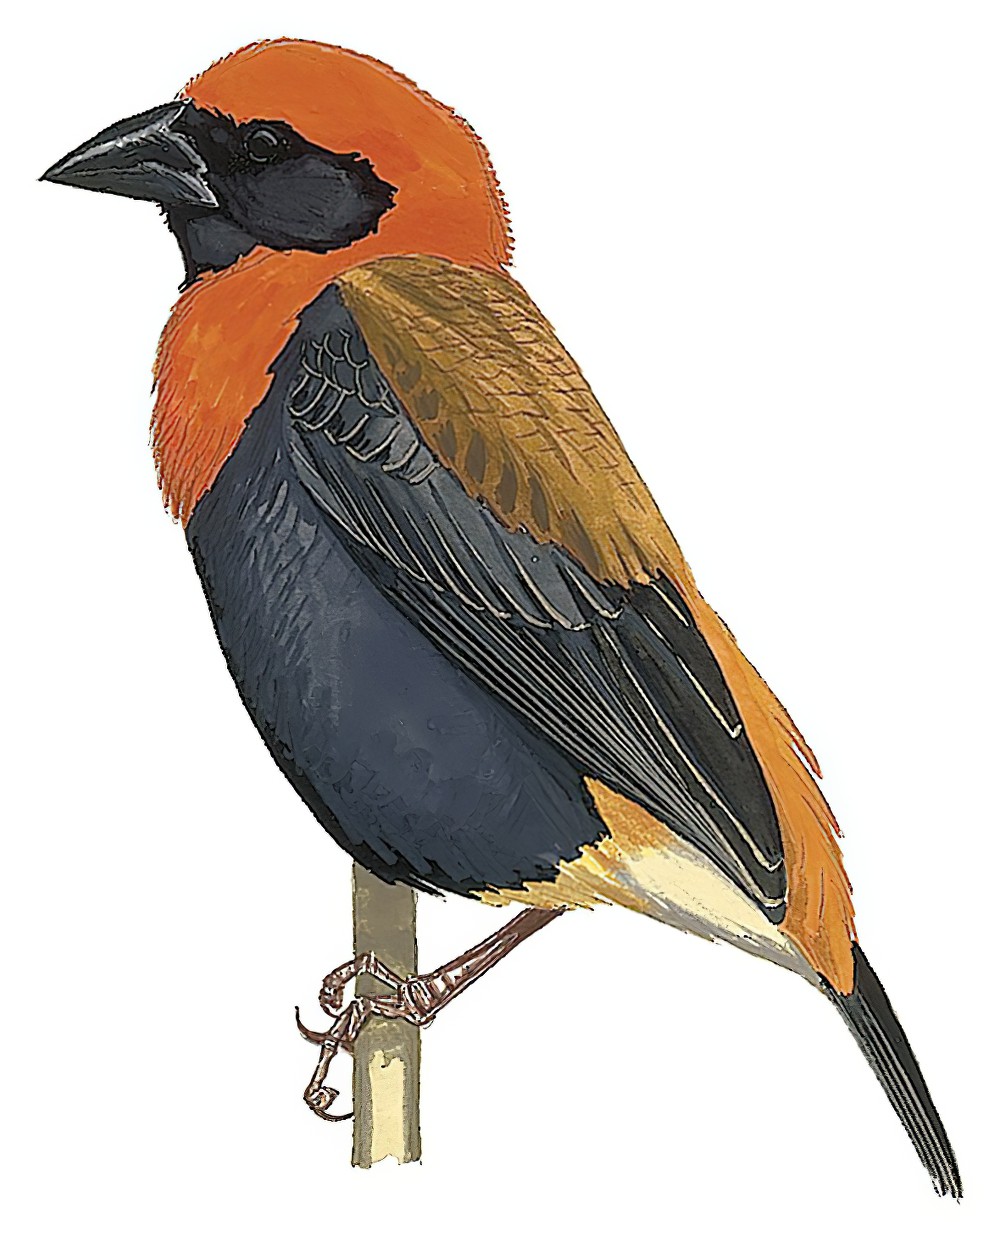 Black-winged Bishop / Euplectes hordeaceus